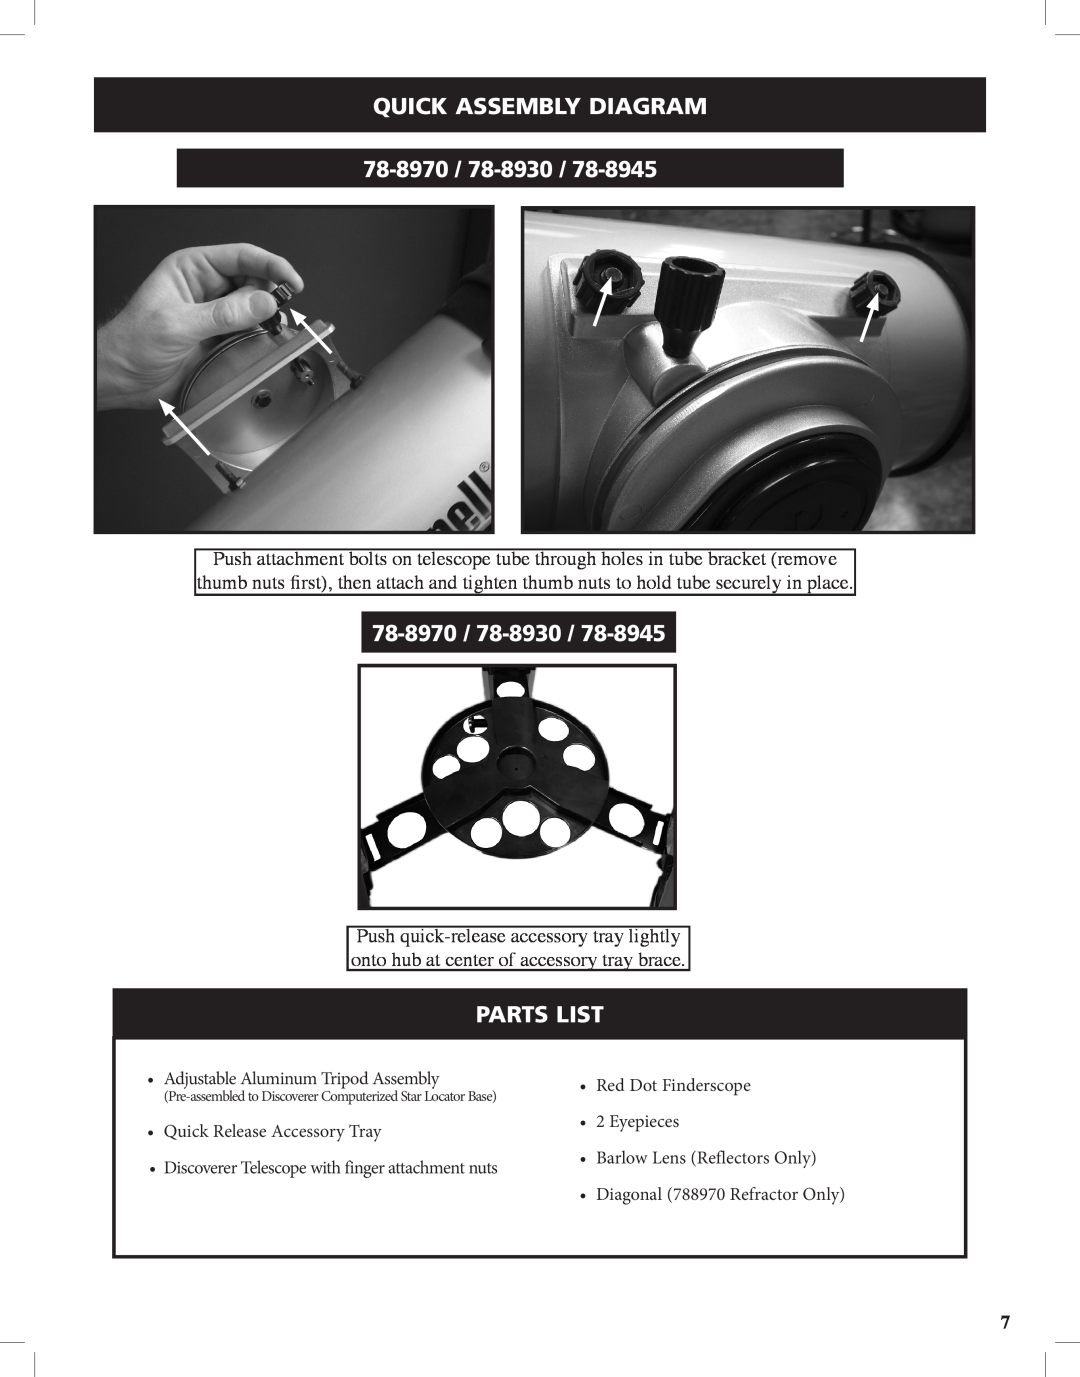 Bushnell Discoverer instruction manual Quick Assembly Diagram 78-8970 / 78-8930, Parts List 